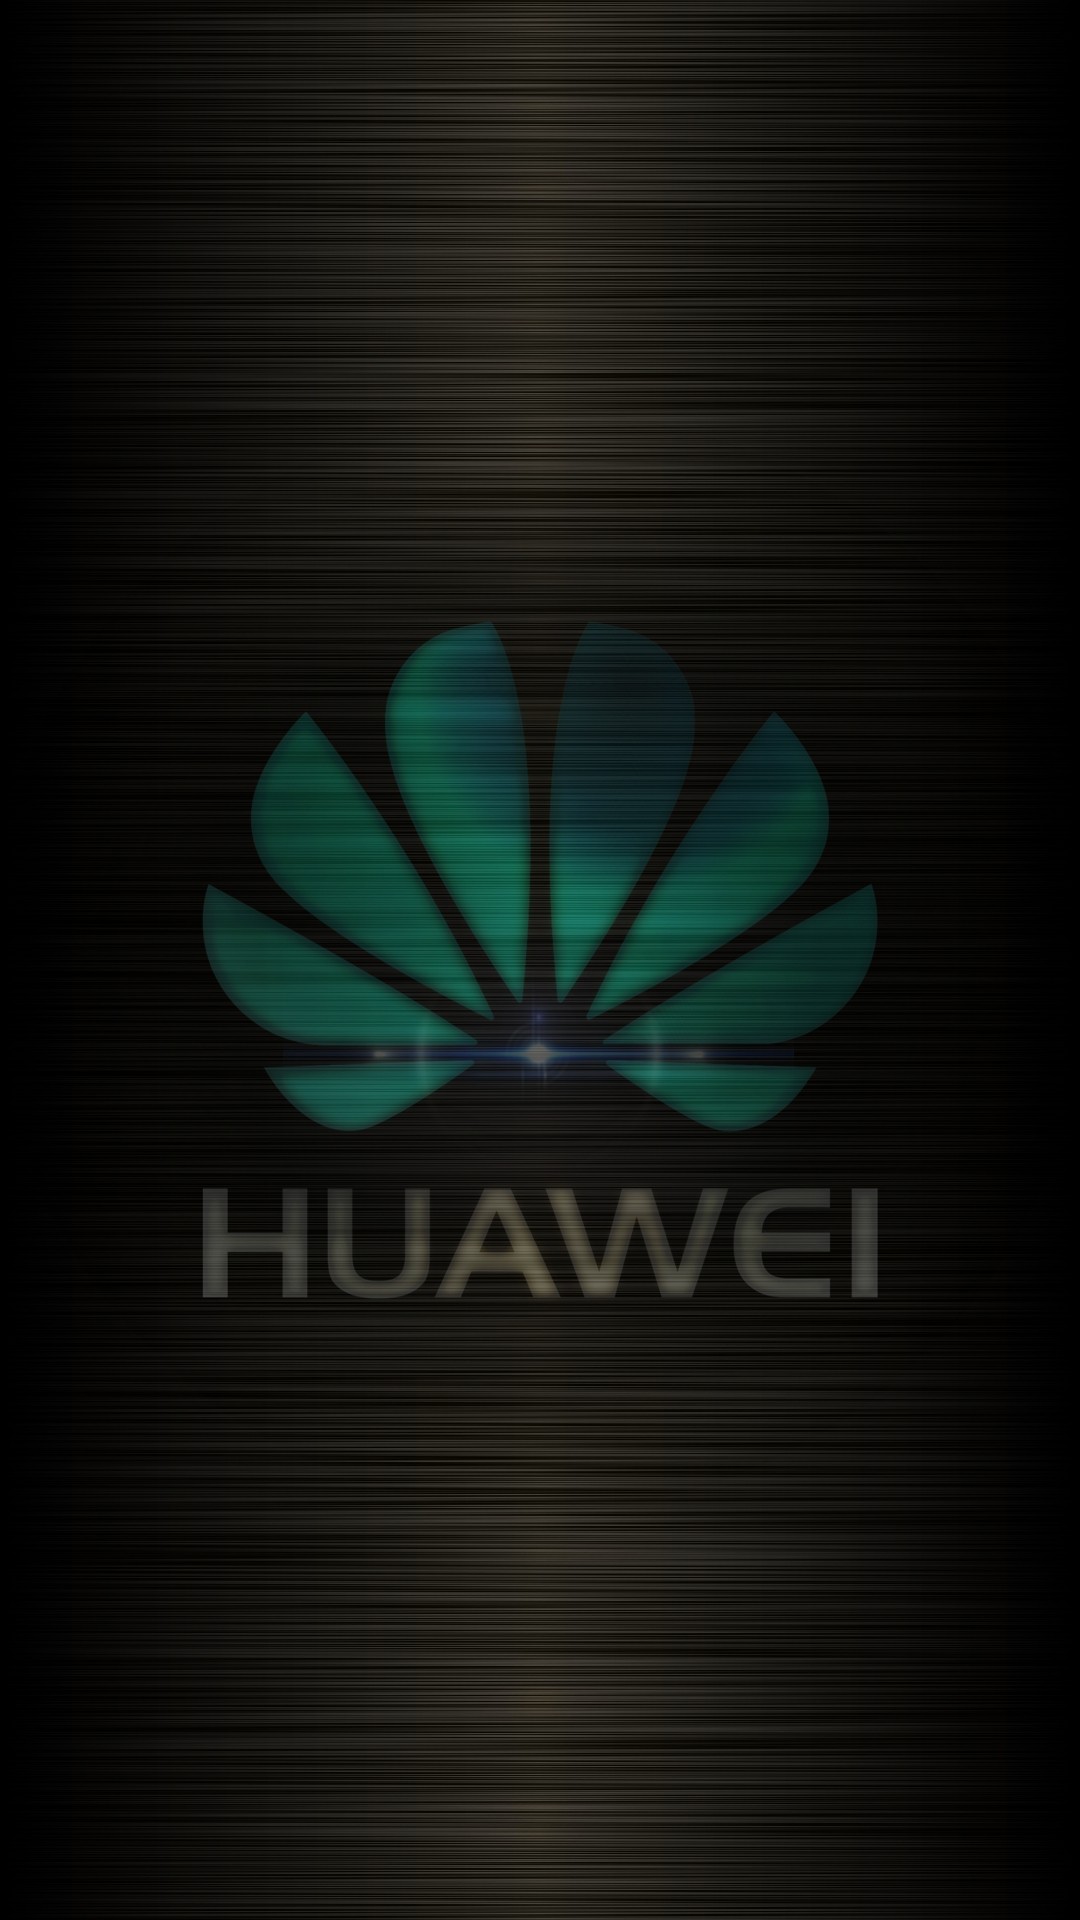 Реклама на телефон honor. Huawei. Хуавей логотип. Обои на телефон Huawei. Заставка на телефон Хуавей.